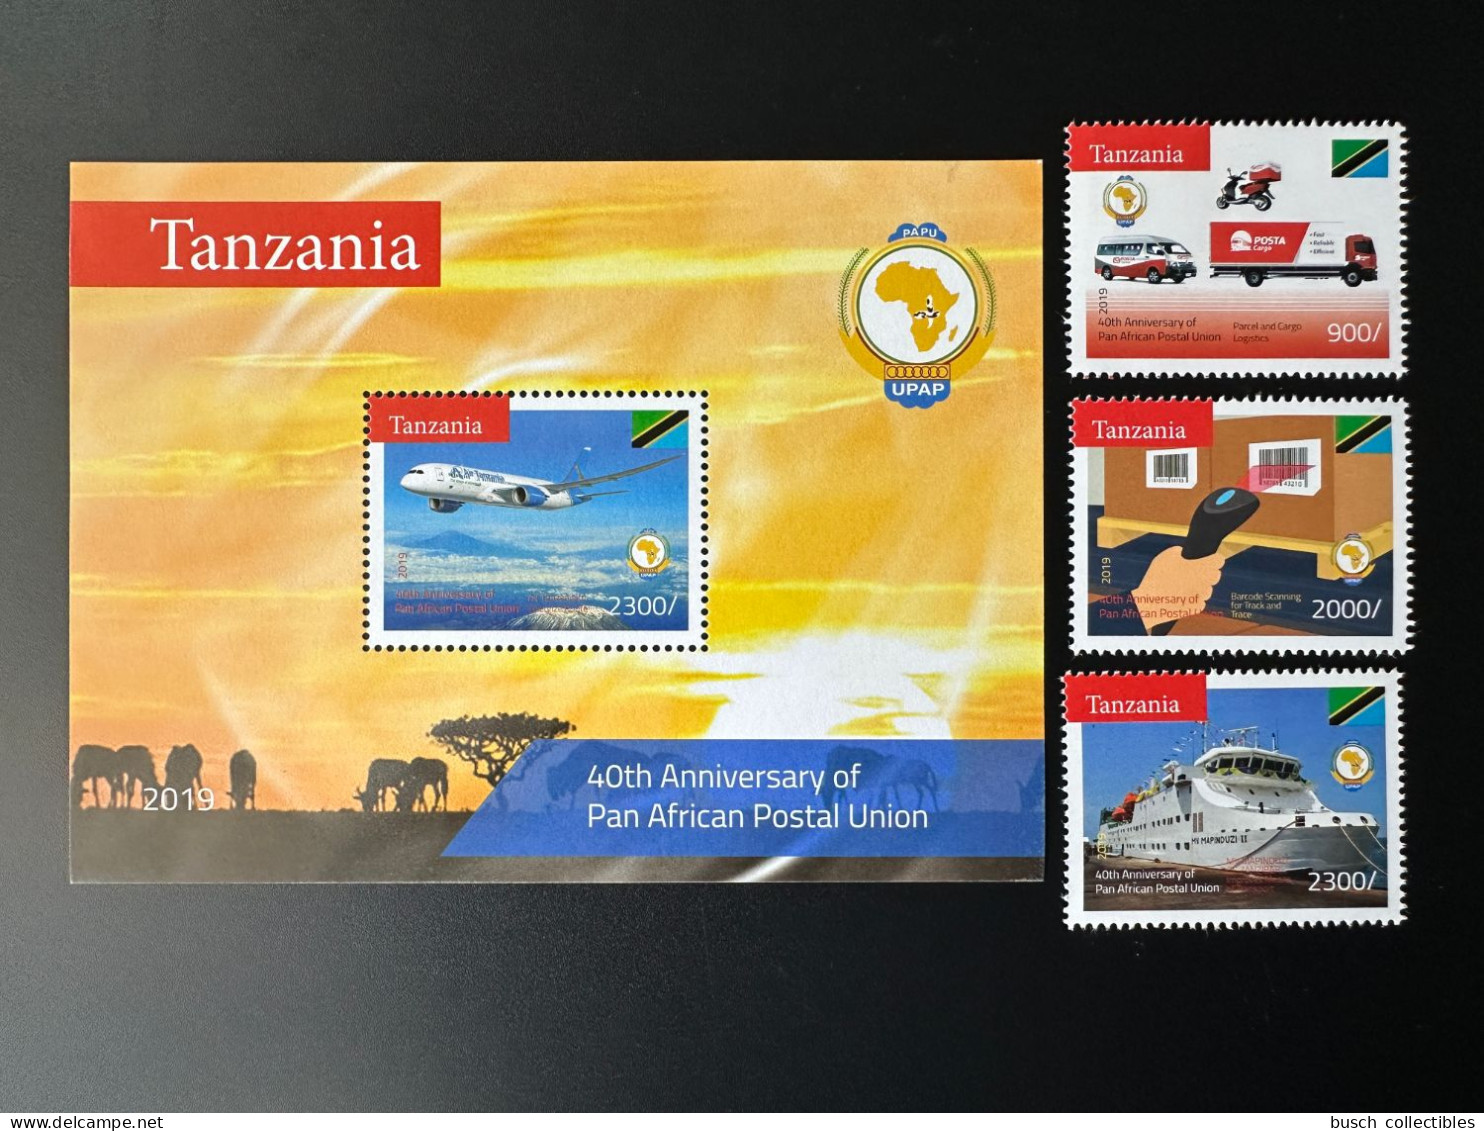 Tanzania Tanzanie Tansania 2019 / 2020 Mi. 5447 - 5449 Bl. 716 PAPU UPAP 40th Anniversary Airplane Flugzeug Avion Ship - Aviones